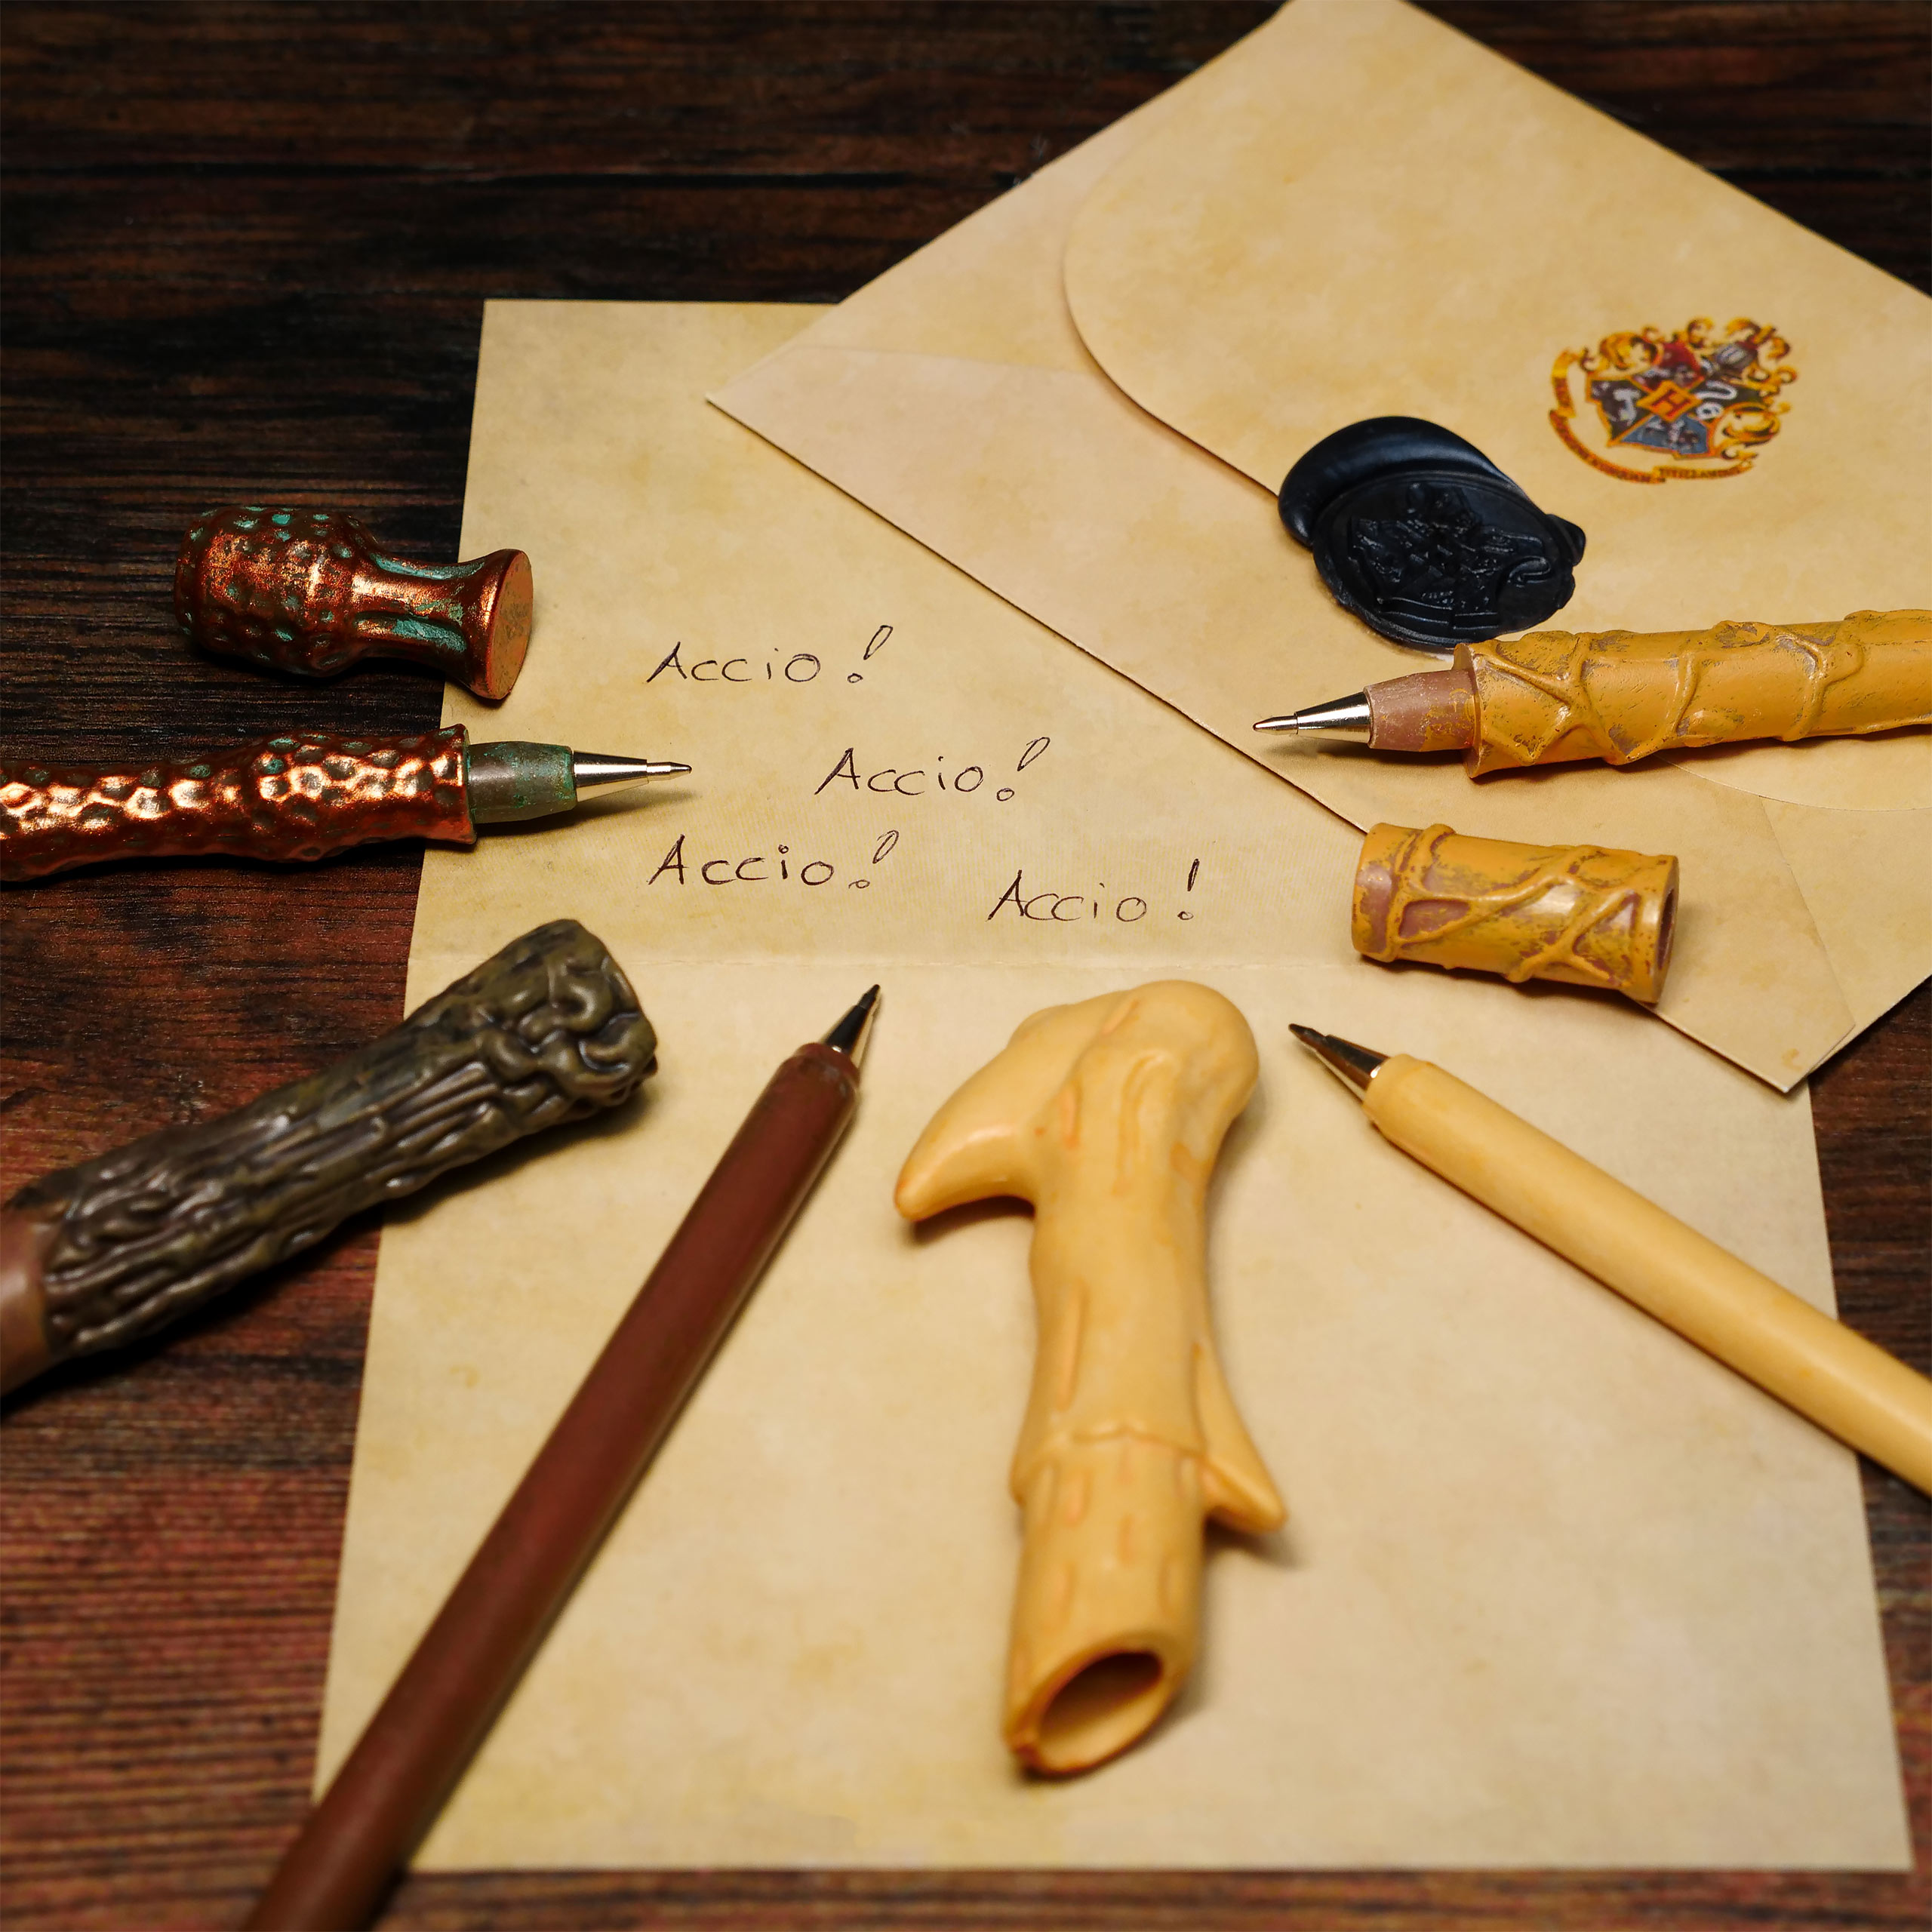 Harry Potter - Zauberstab Stifte 4er Set